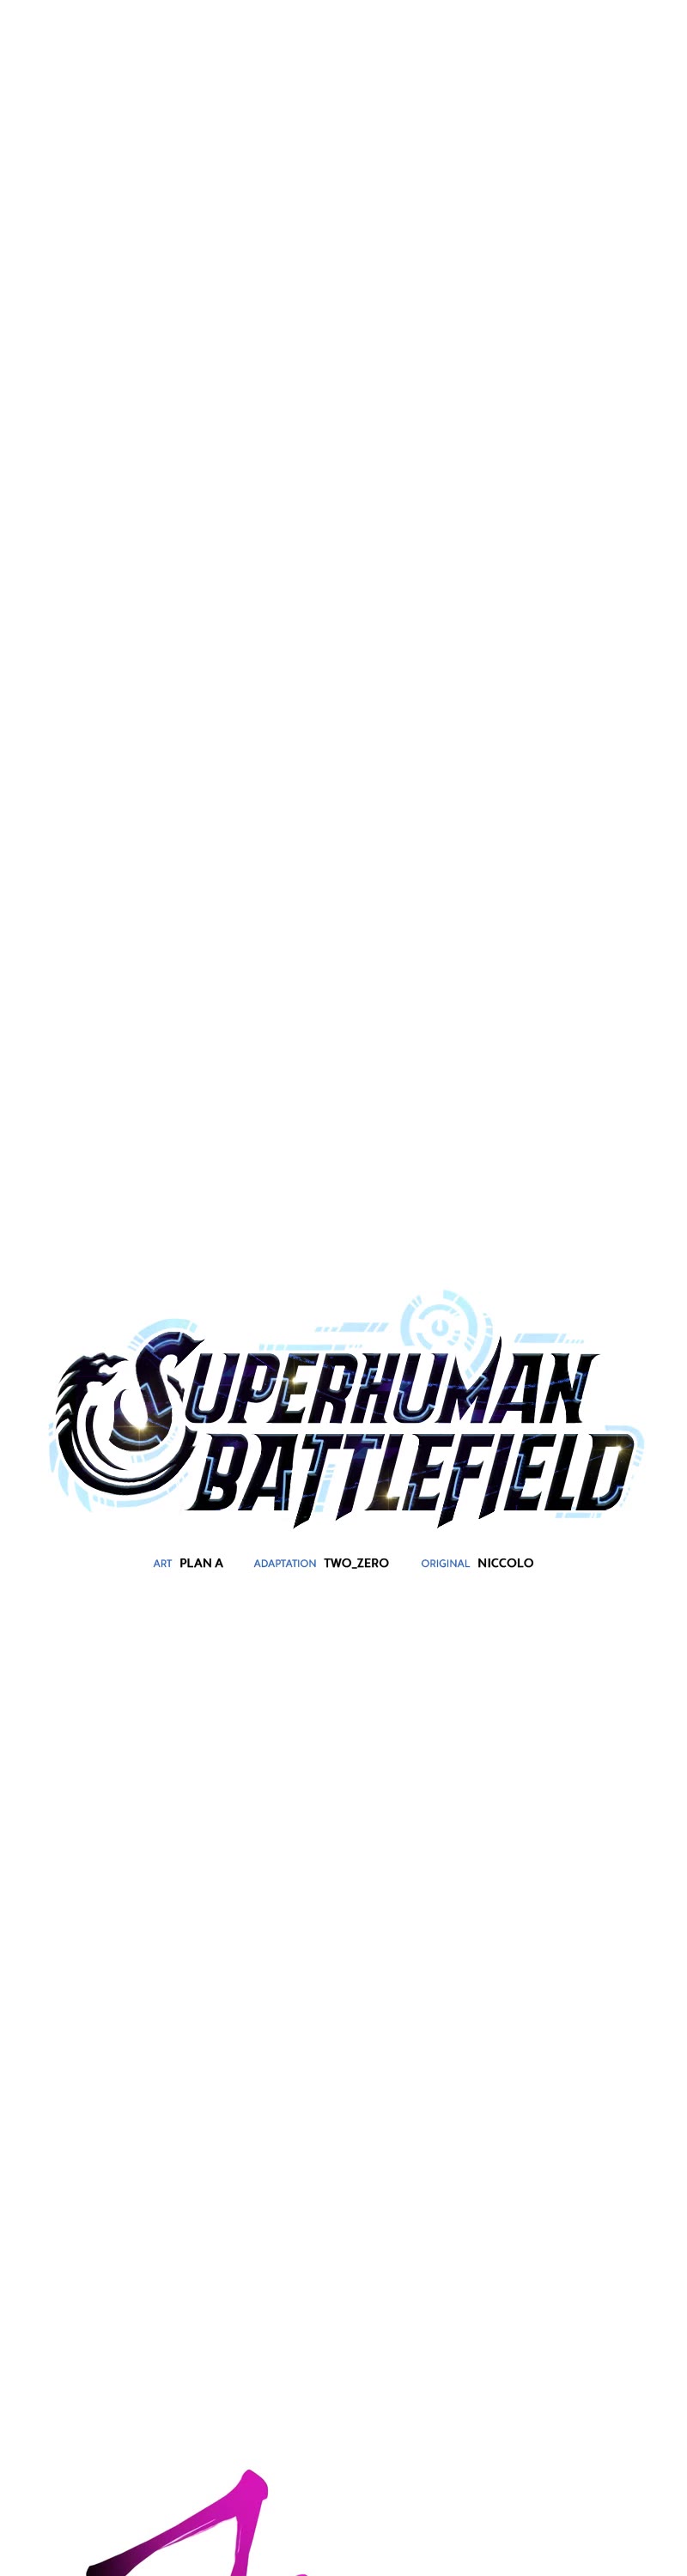 Superhuman Battlefield - Page 2